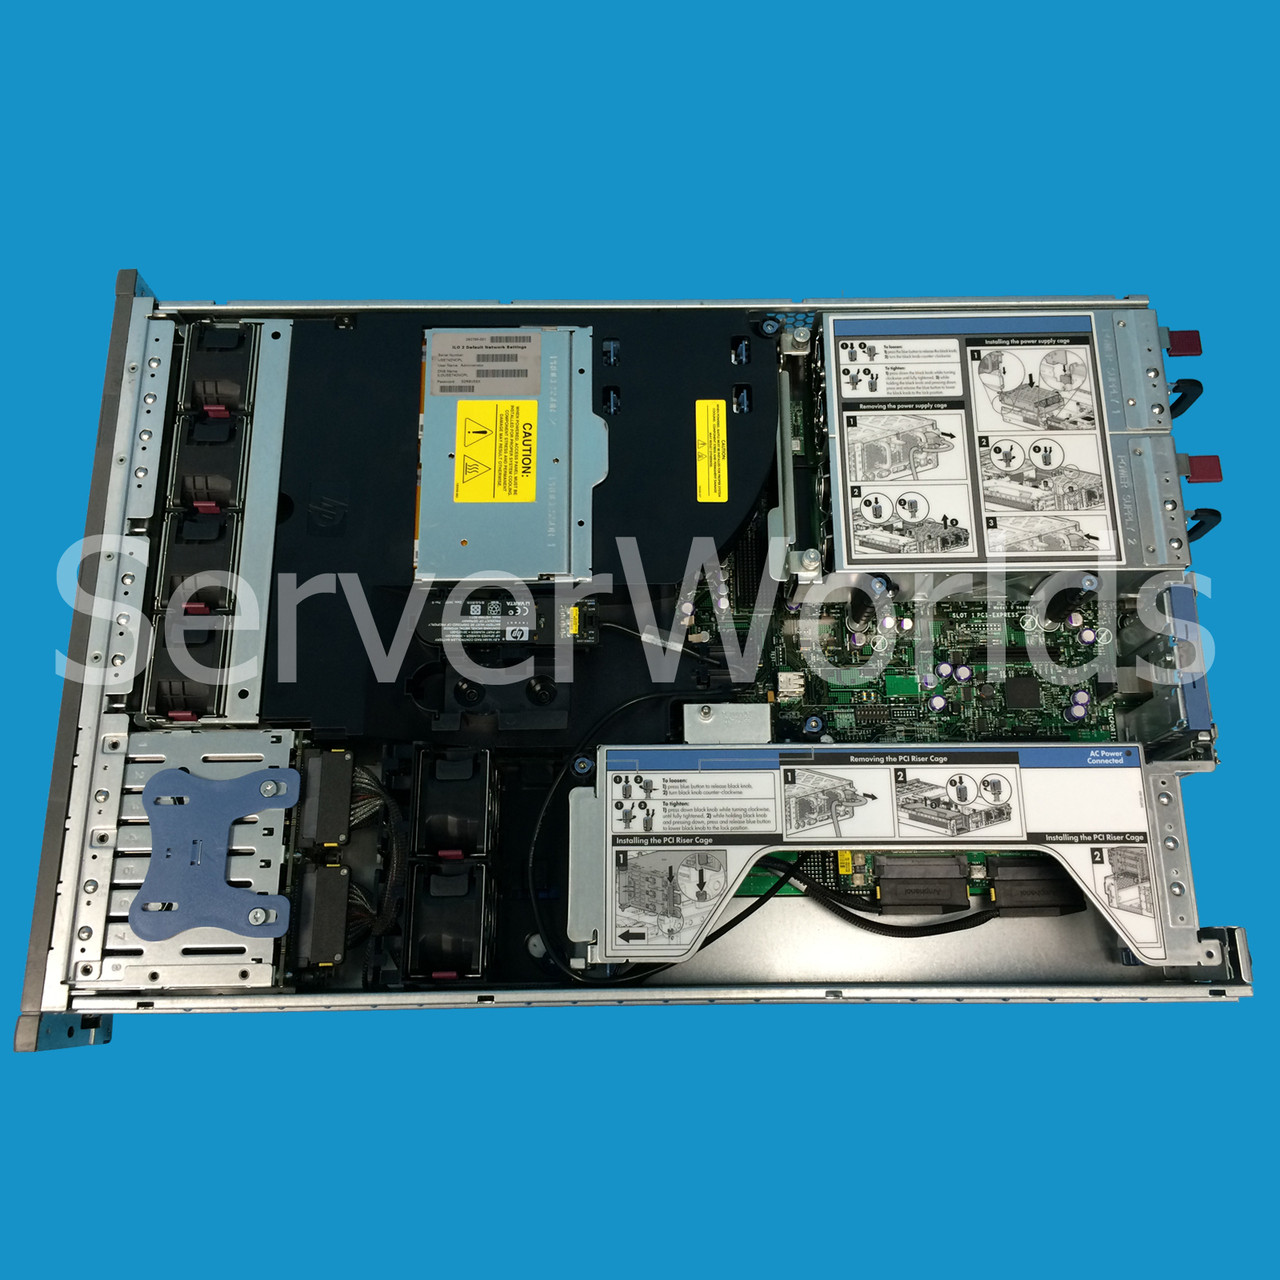 Refurbished HP DL380 G5 QC L5420 2.5Ghz 2GB 465323-001